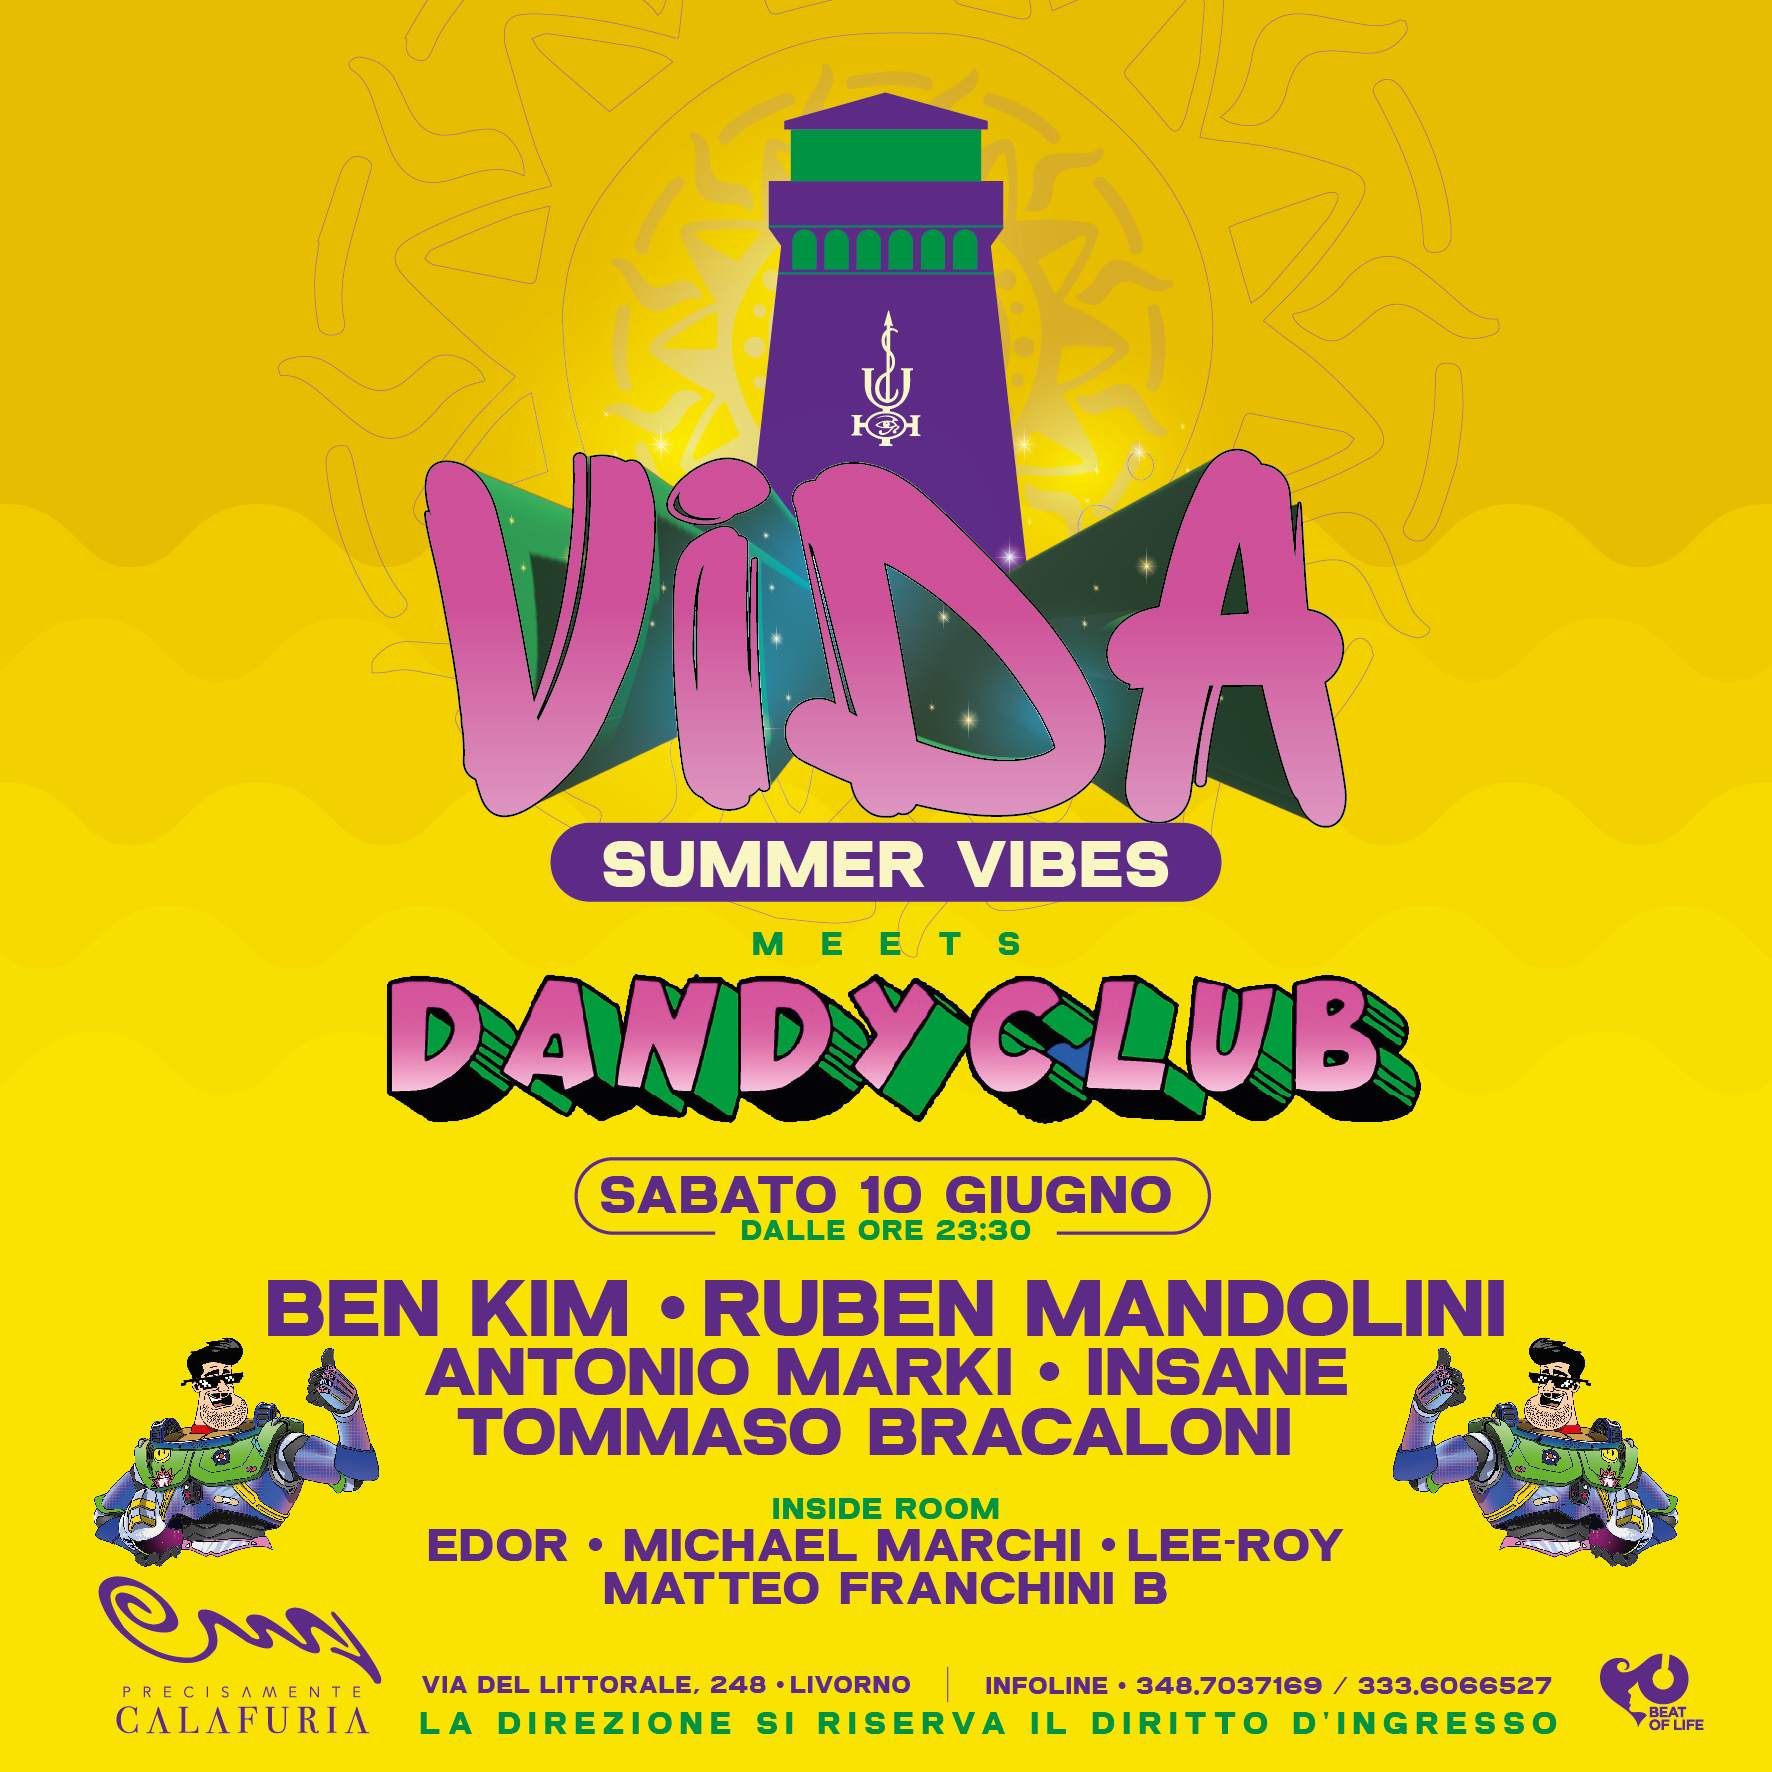 Vida Summer Vibes meets Dandy Club - フライヤー裏